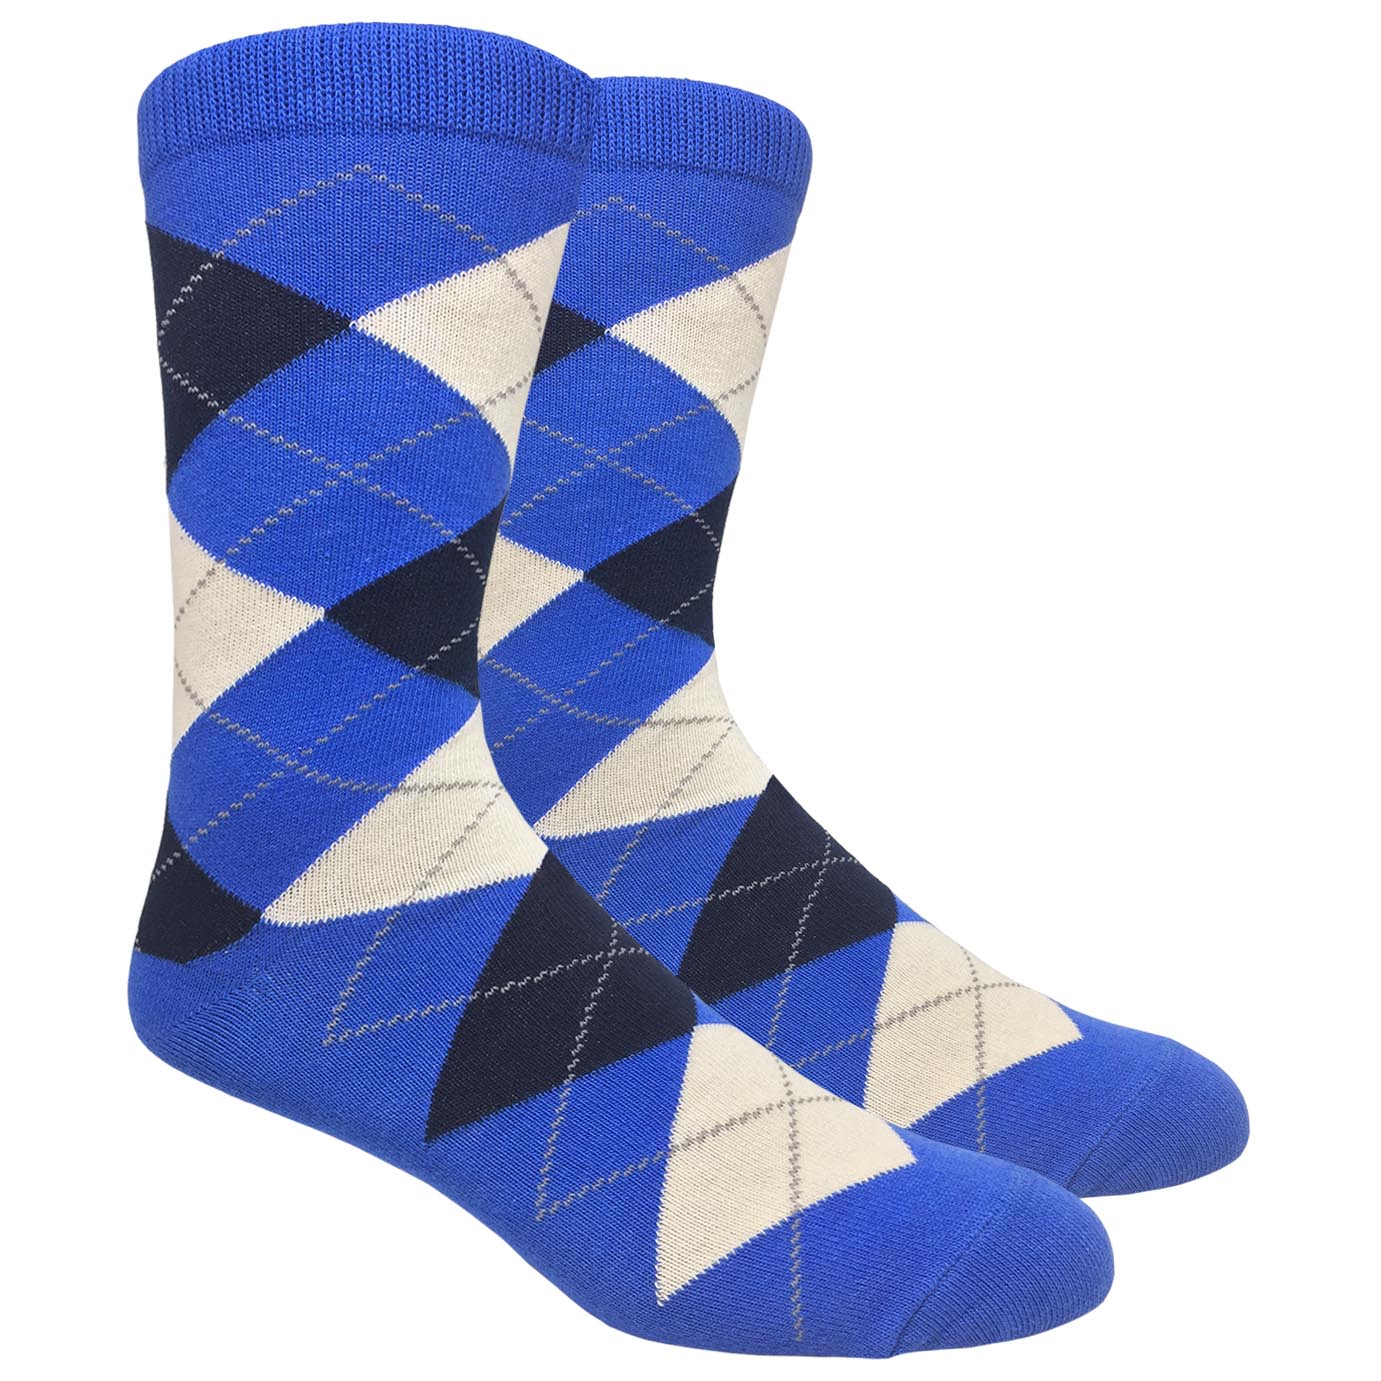 FineFit Black Label Argyle Socks - Royal Blue